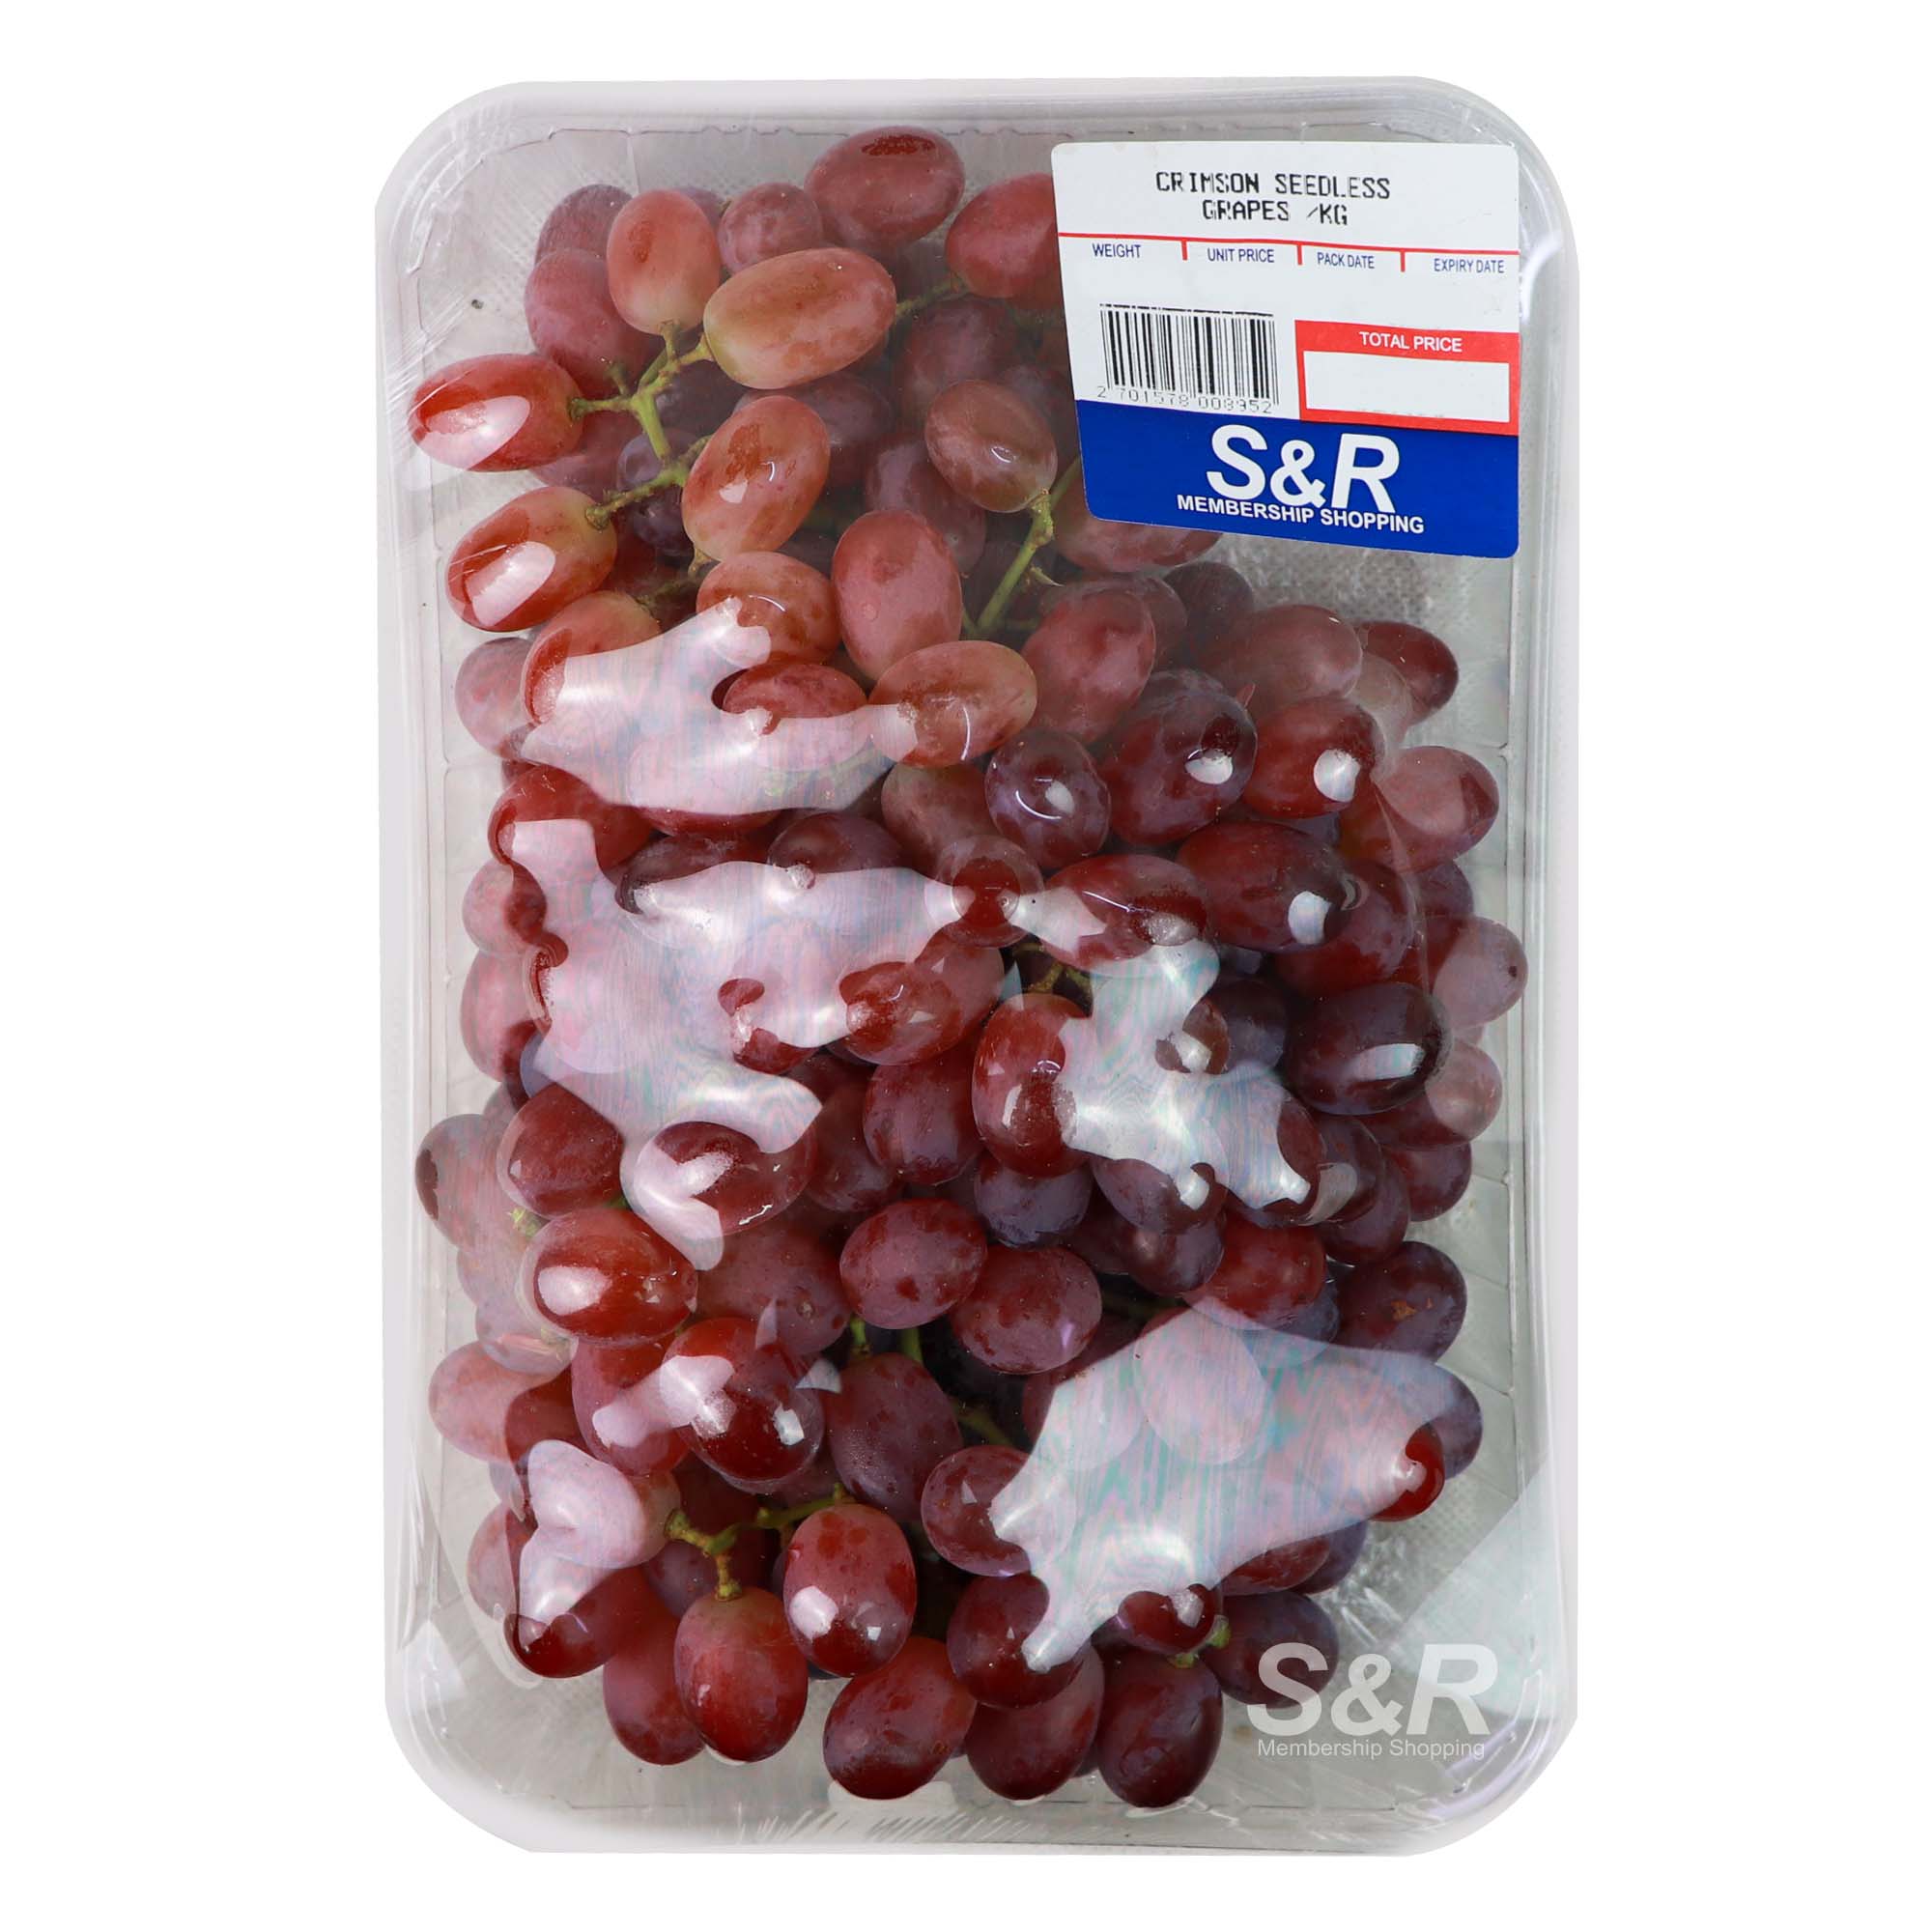 Crimson Seedless Grapes approx. 1.3kg